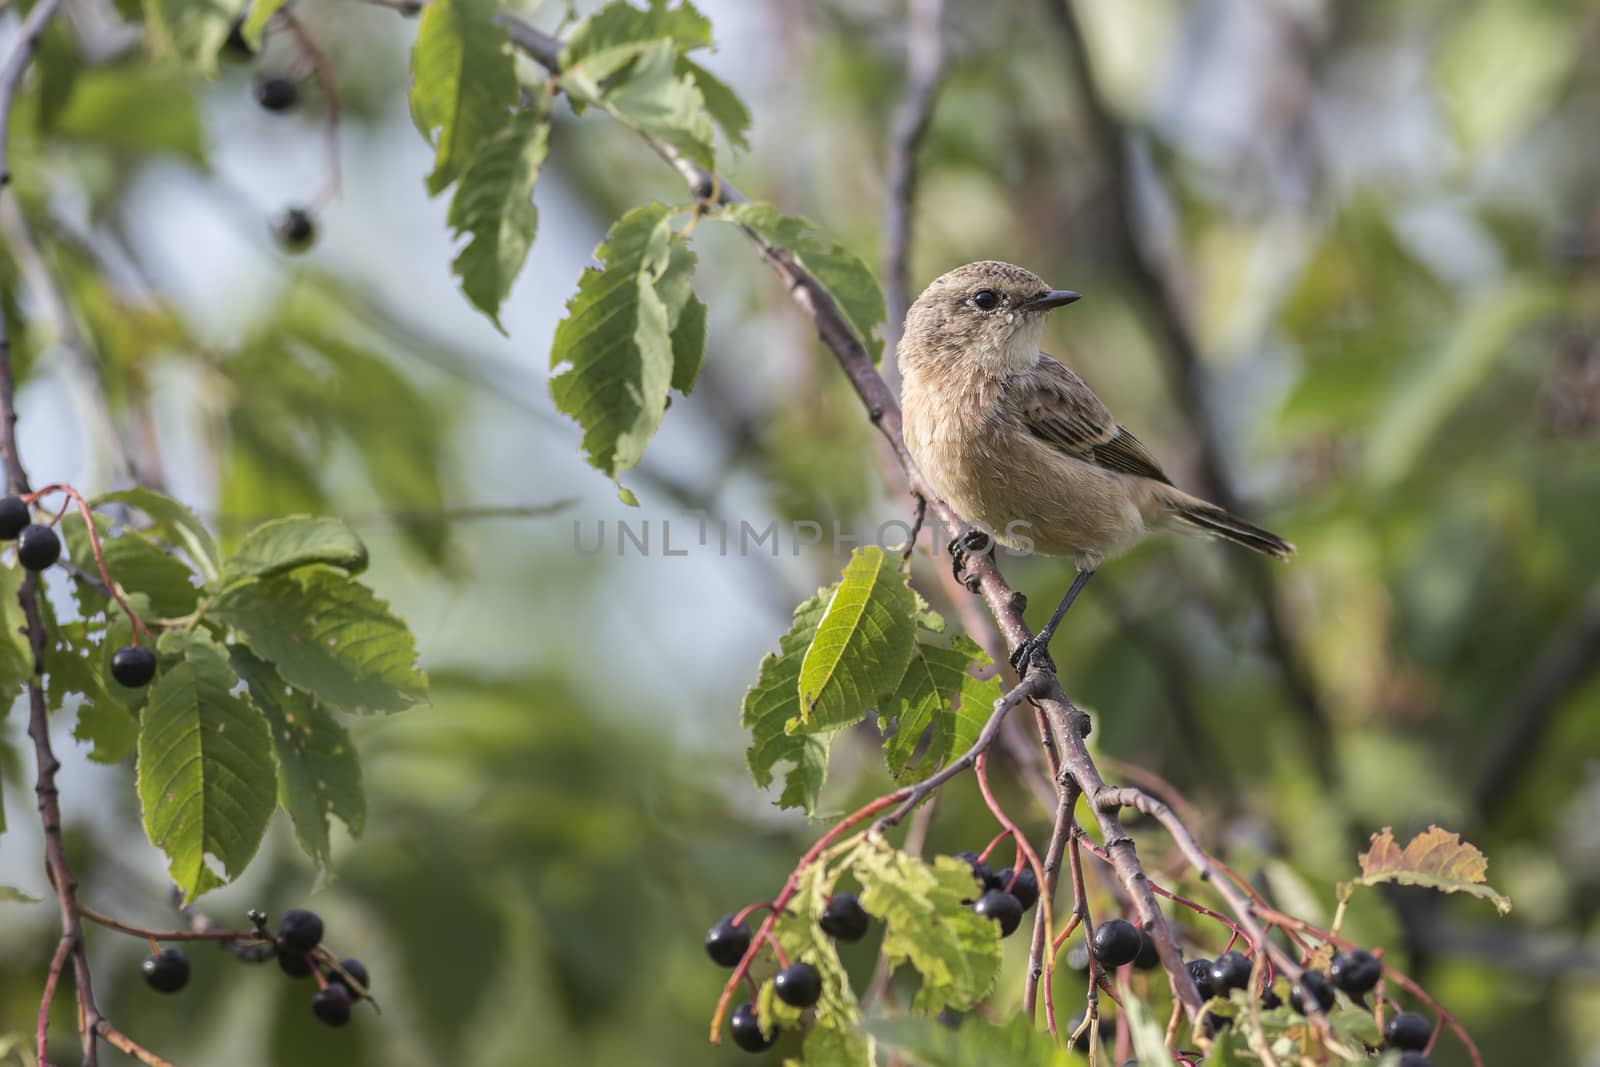 Fledgling stonechat sitting on a branch bird cherry